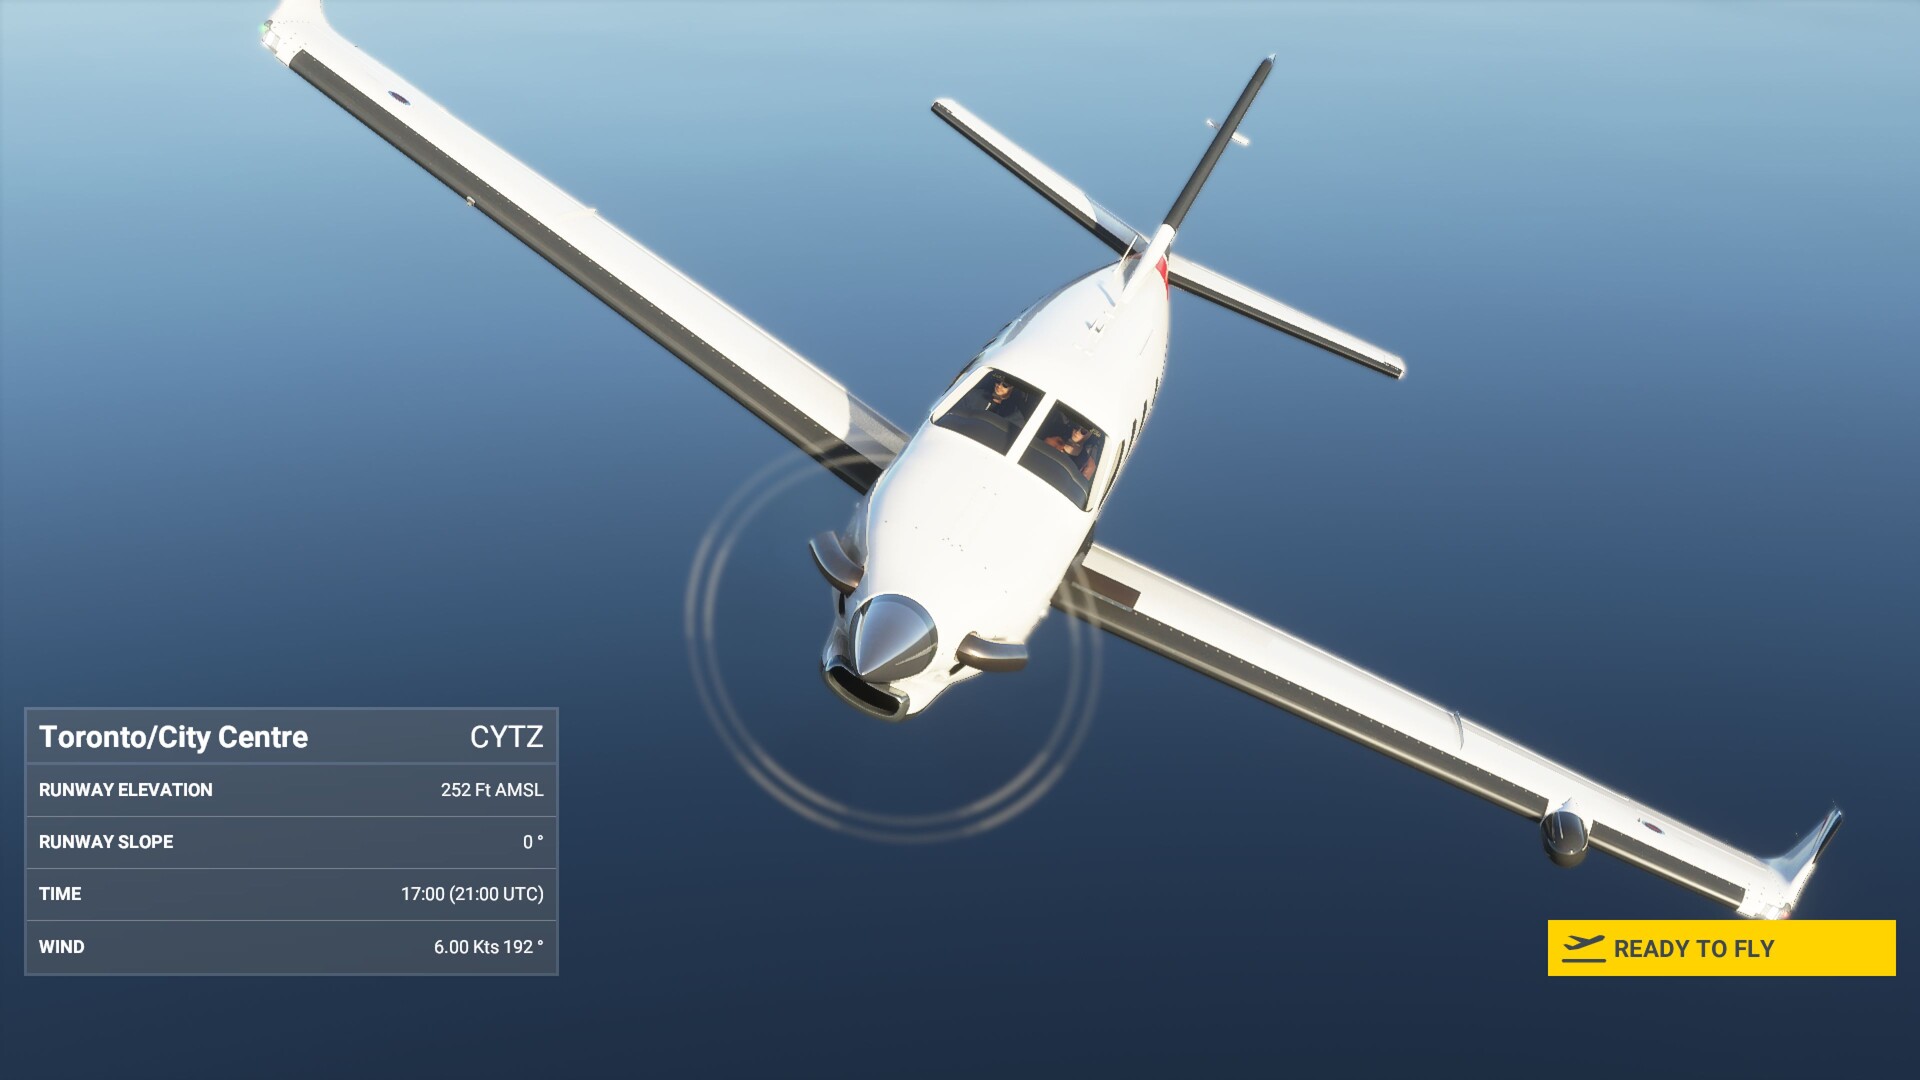 Microsoft Flight Simulator lands August 18 on PC - NotebookCheck